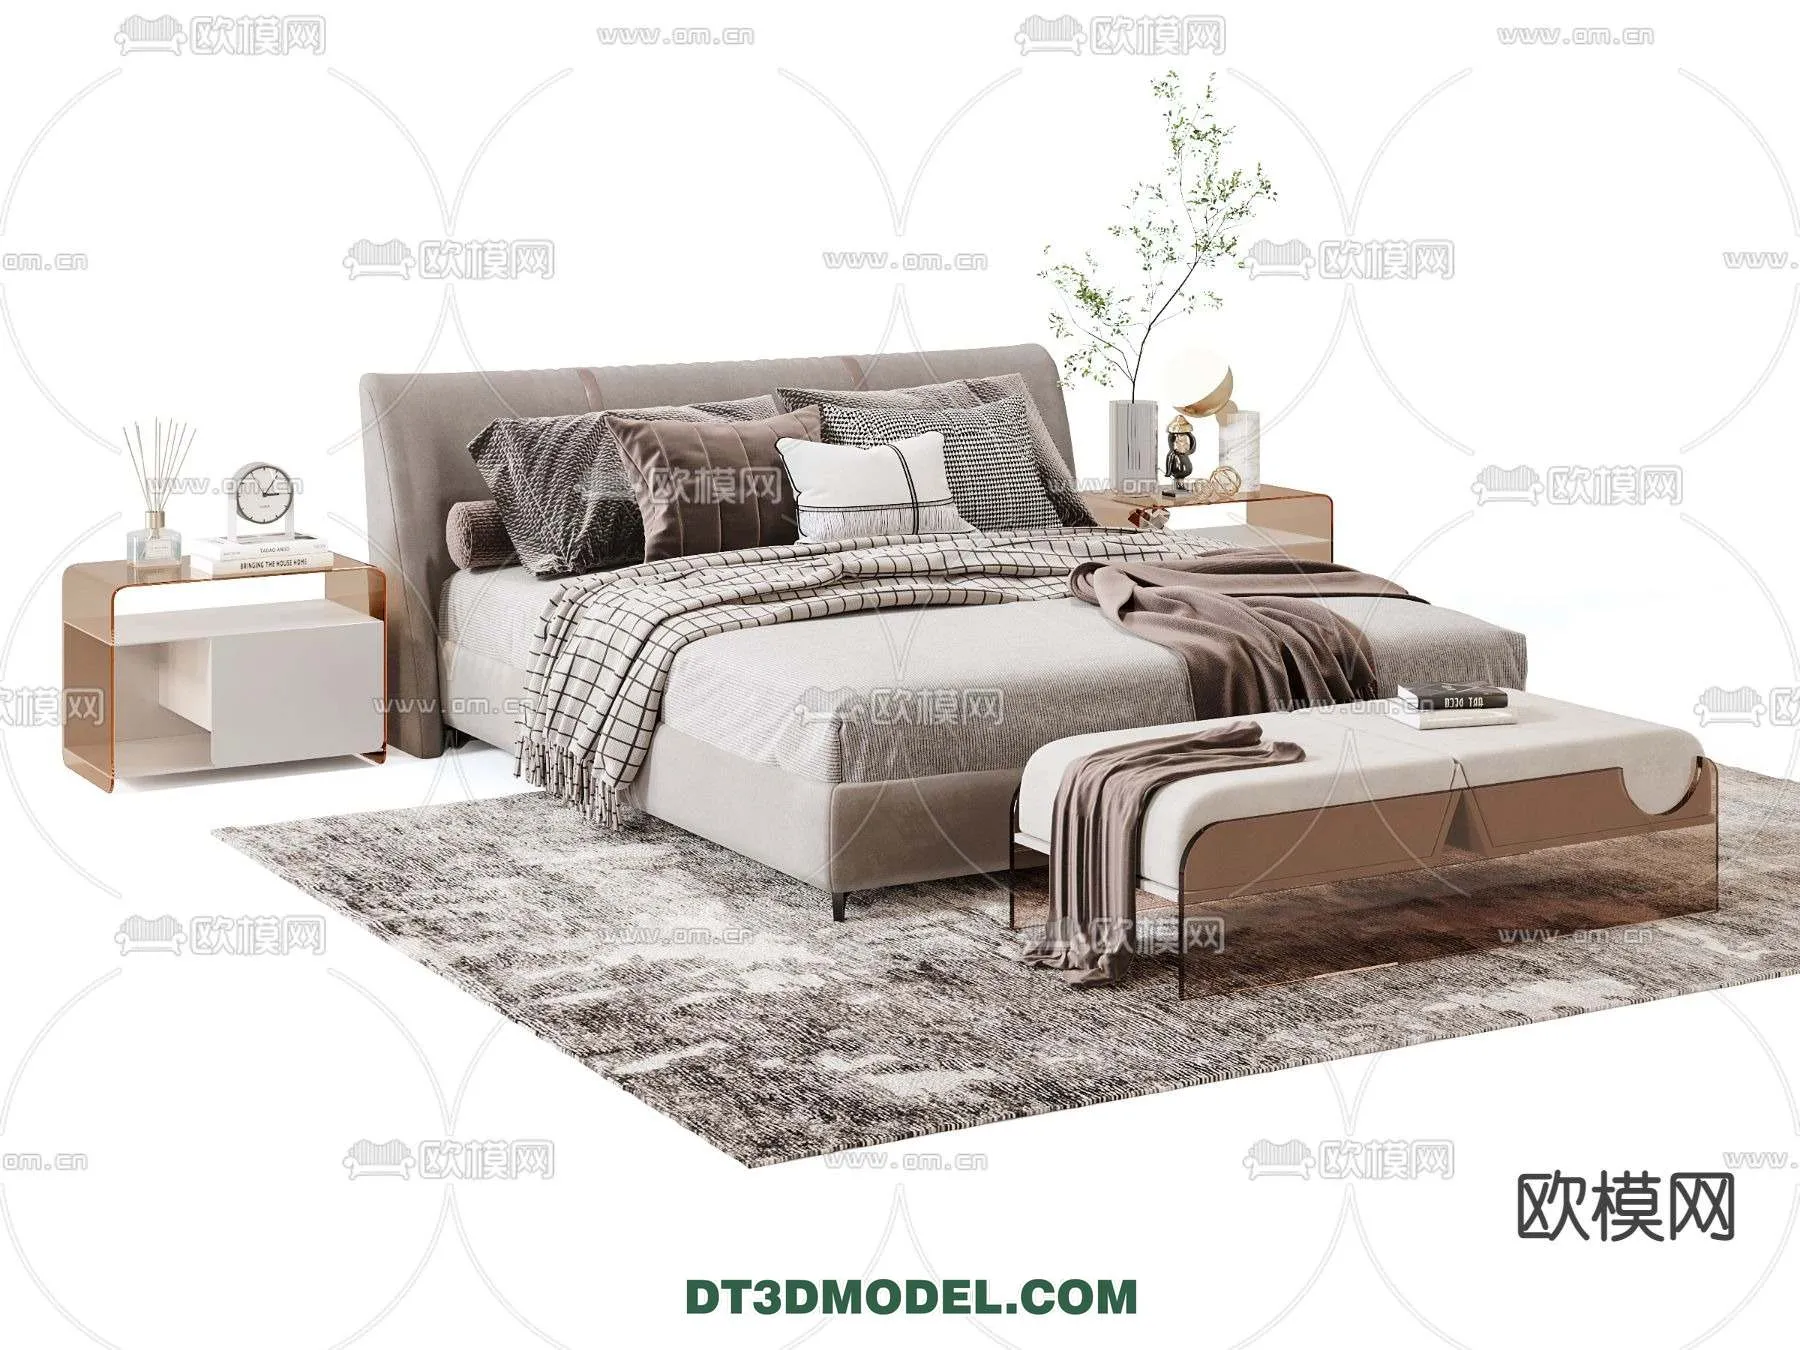 Double Bed 3D Models – 0054